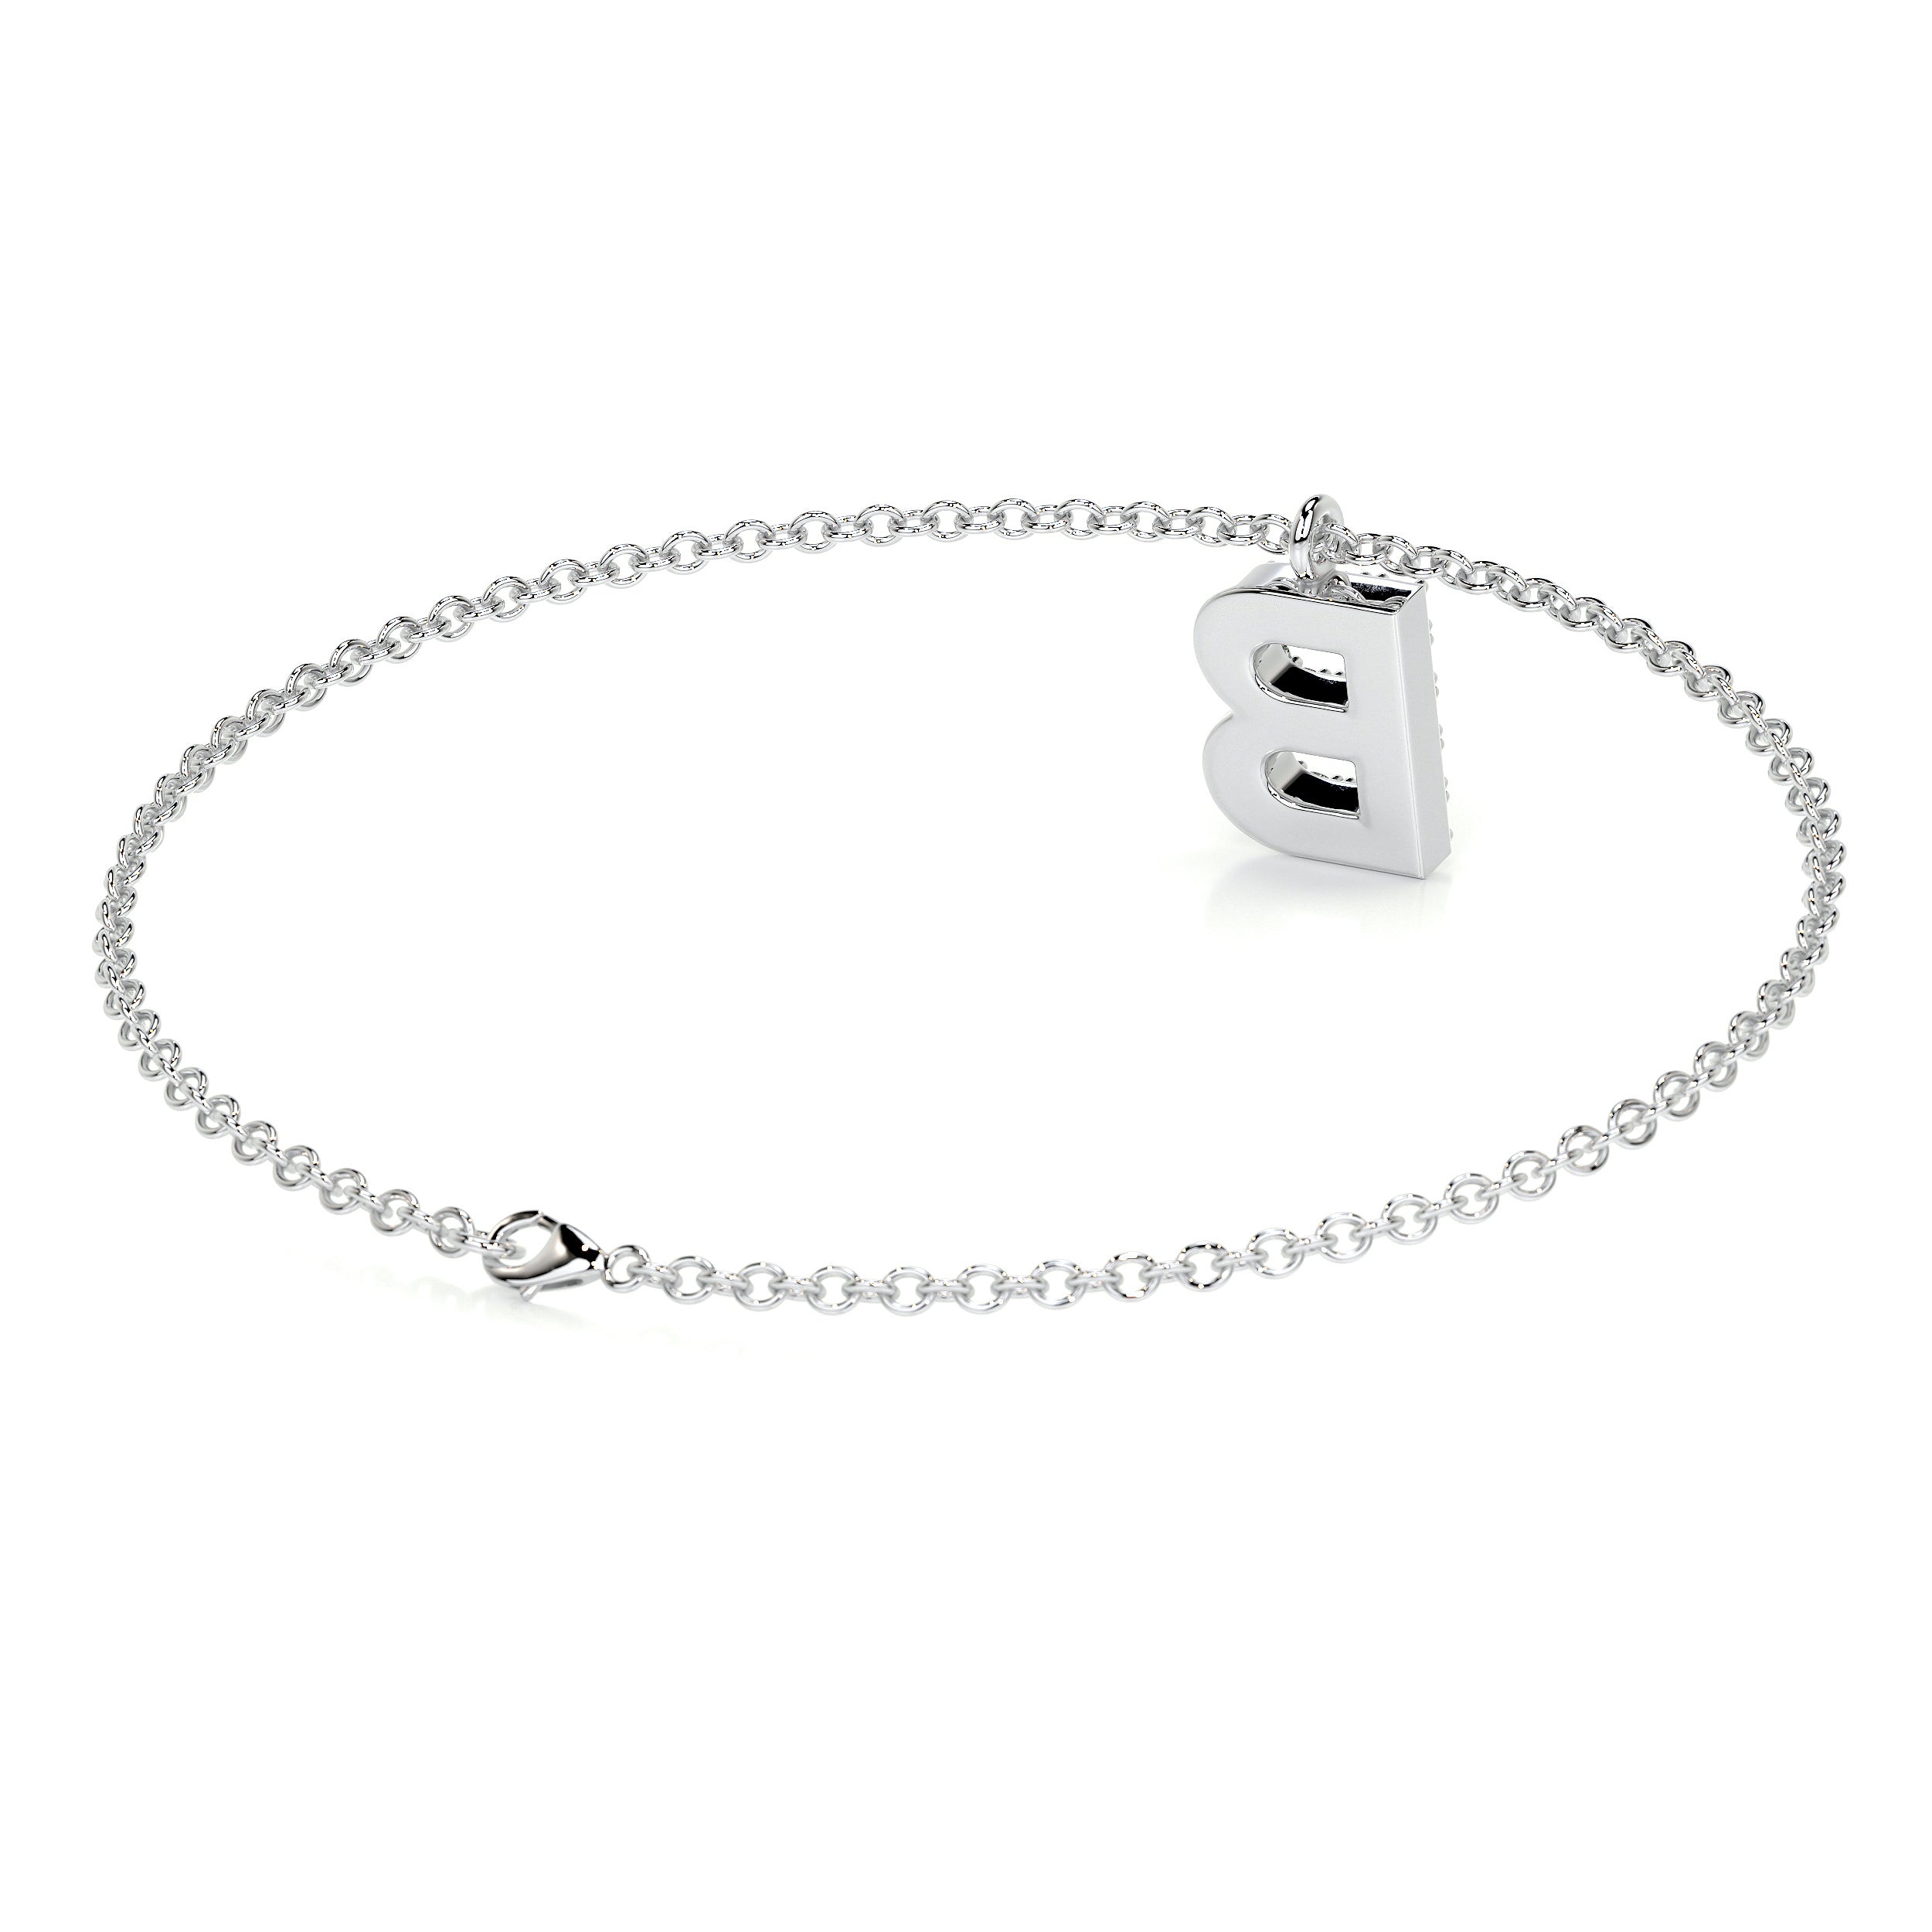 Barbara Letter Diamonds Bracelet   (0.15 Carat) -18K White Gold